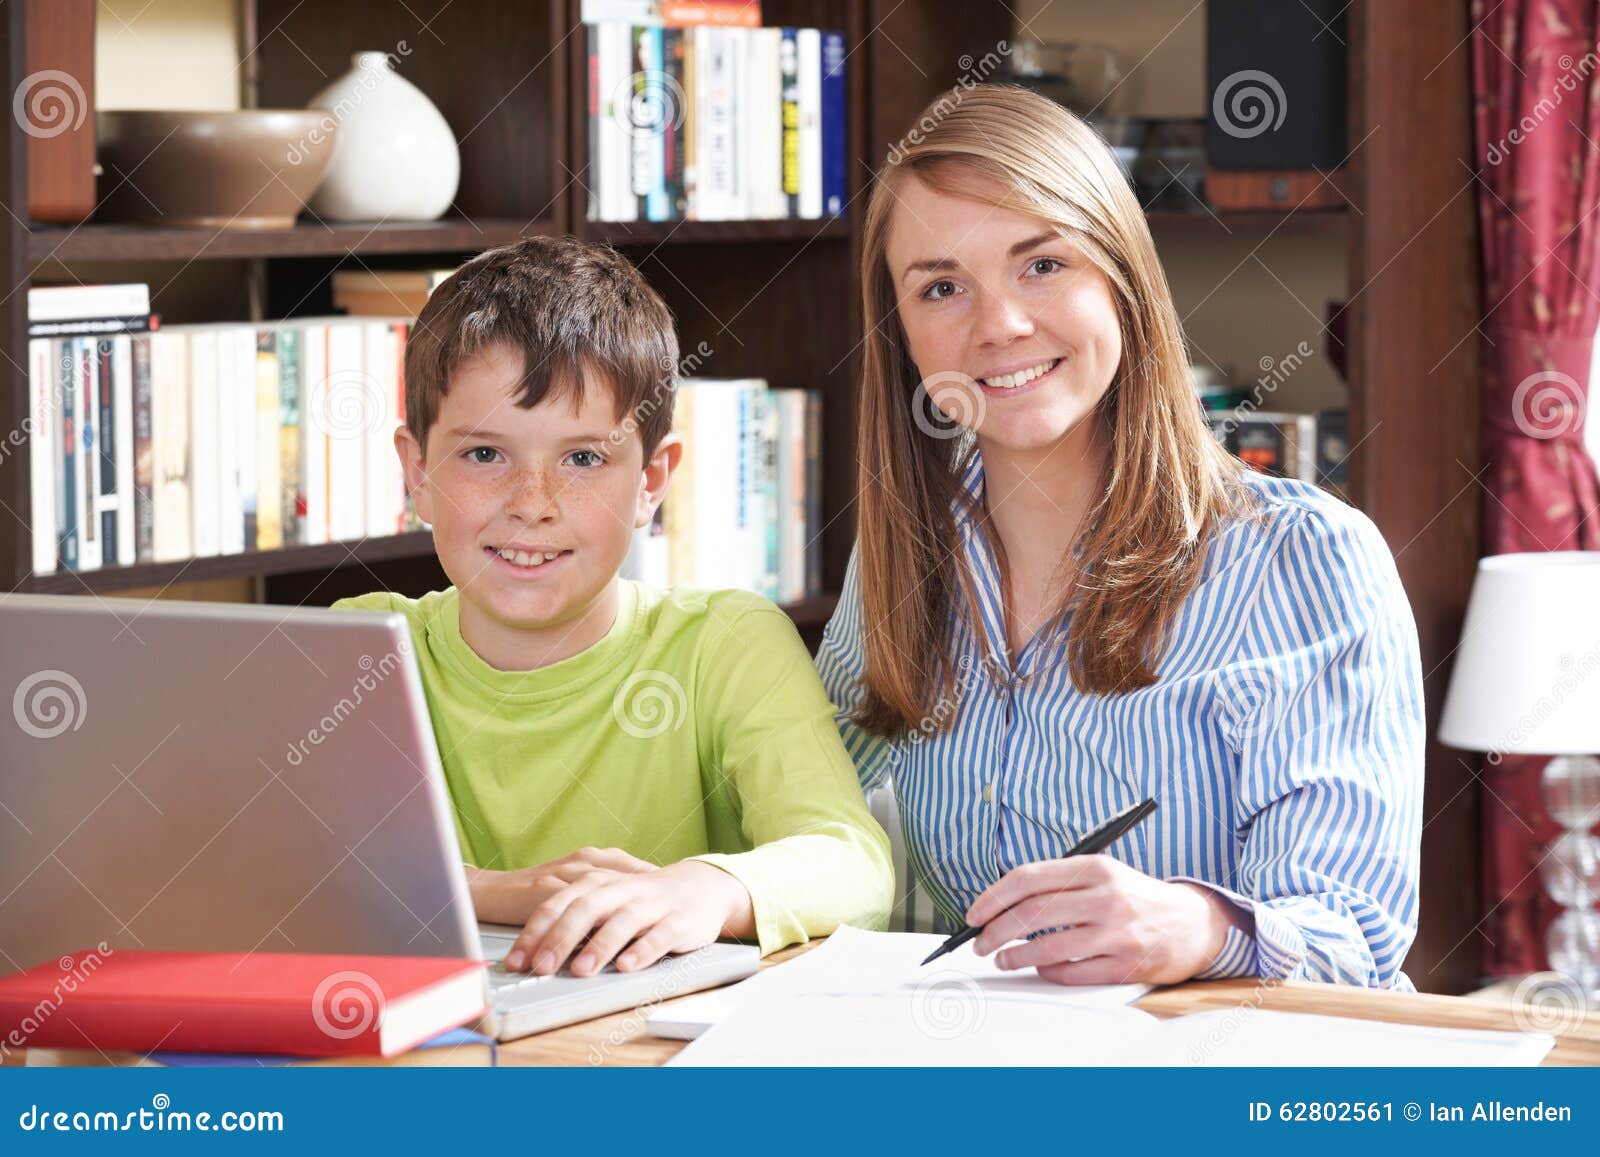 female tutor helping boy with home studies